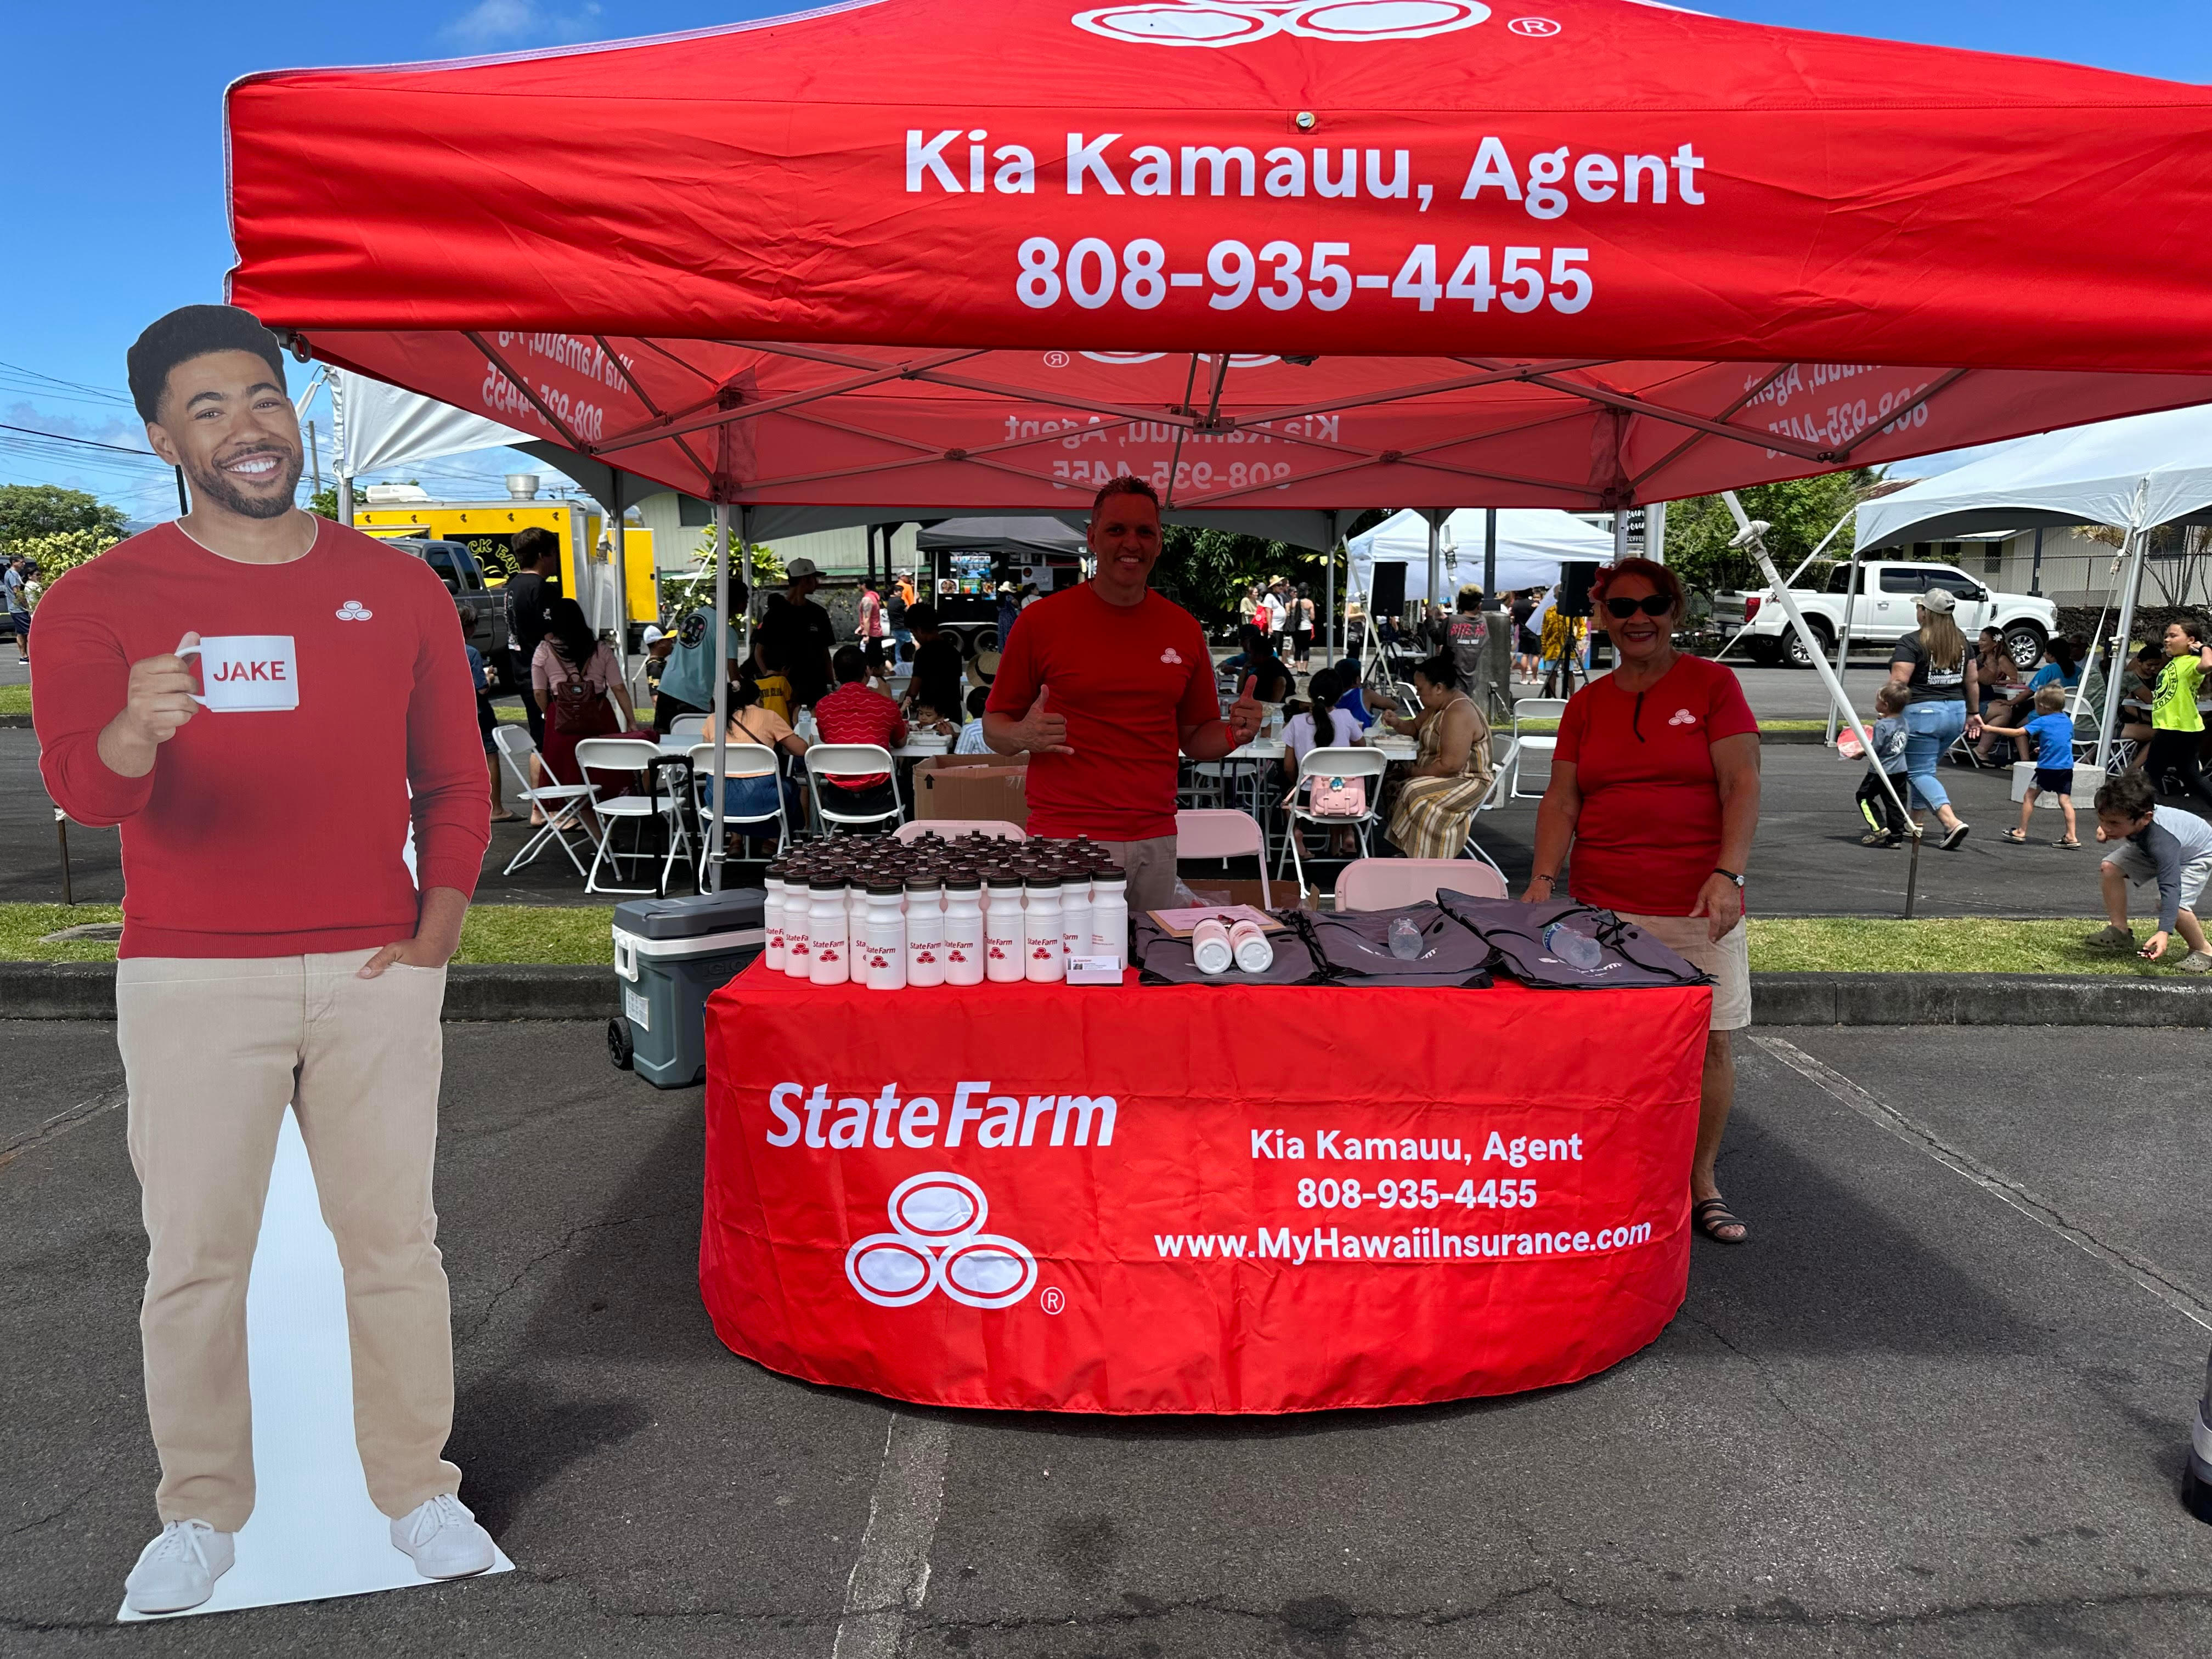 Kia Kamauu - State Farm Insurance Agent Kia Kamauu - State Farm Insurance Agent Hilo (808)935-4455